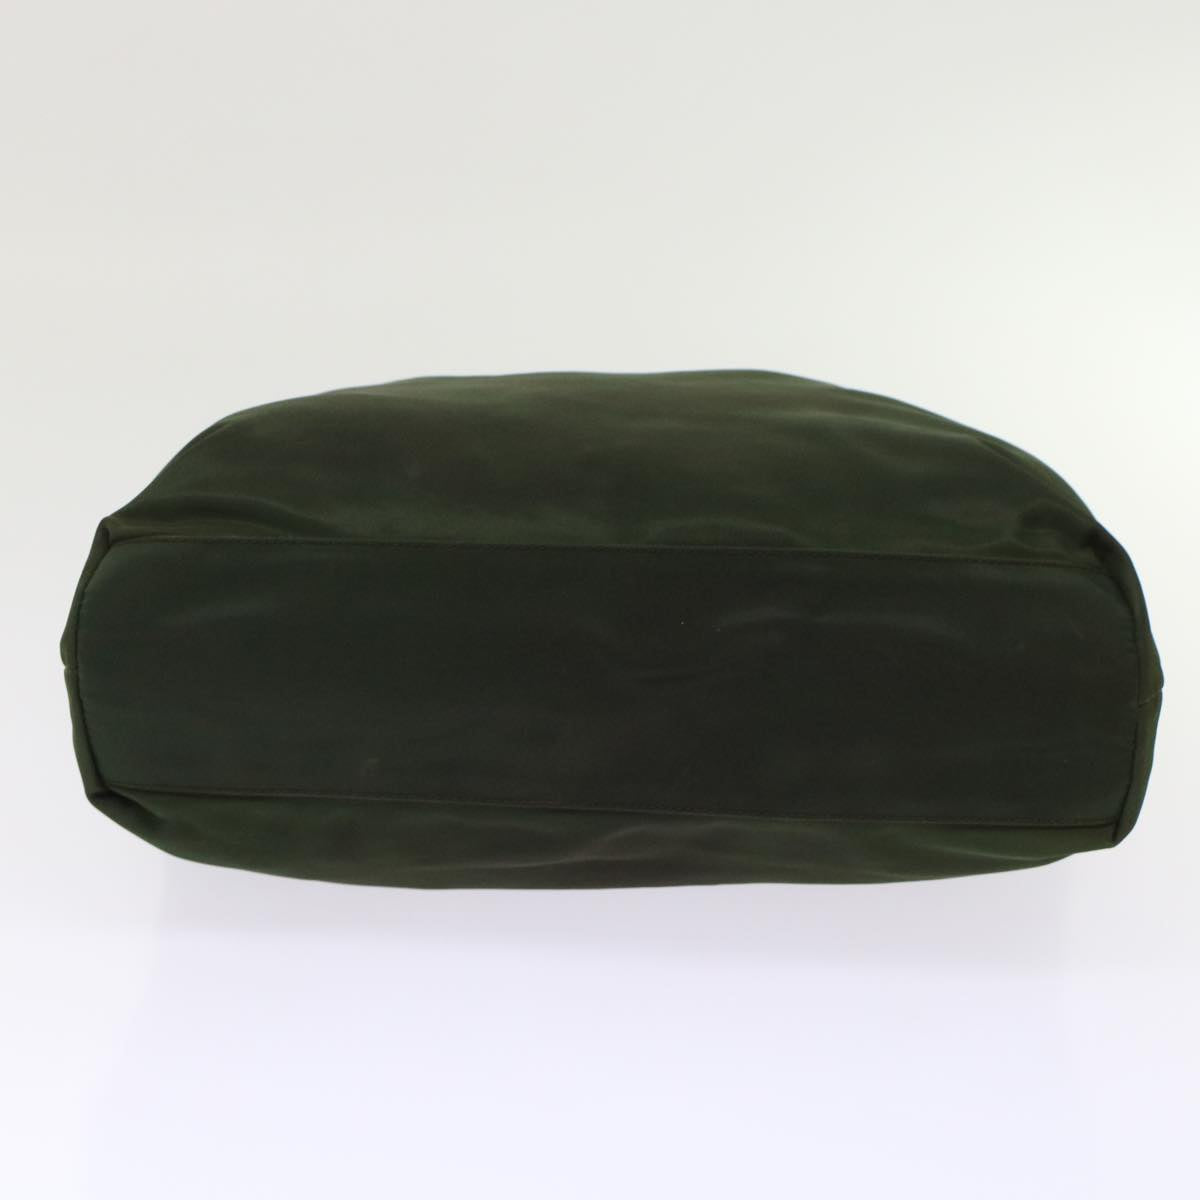 PRADA Tote Bag Nylon Leather Green Auth 49023